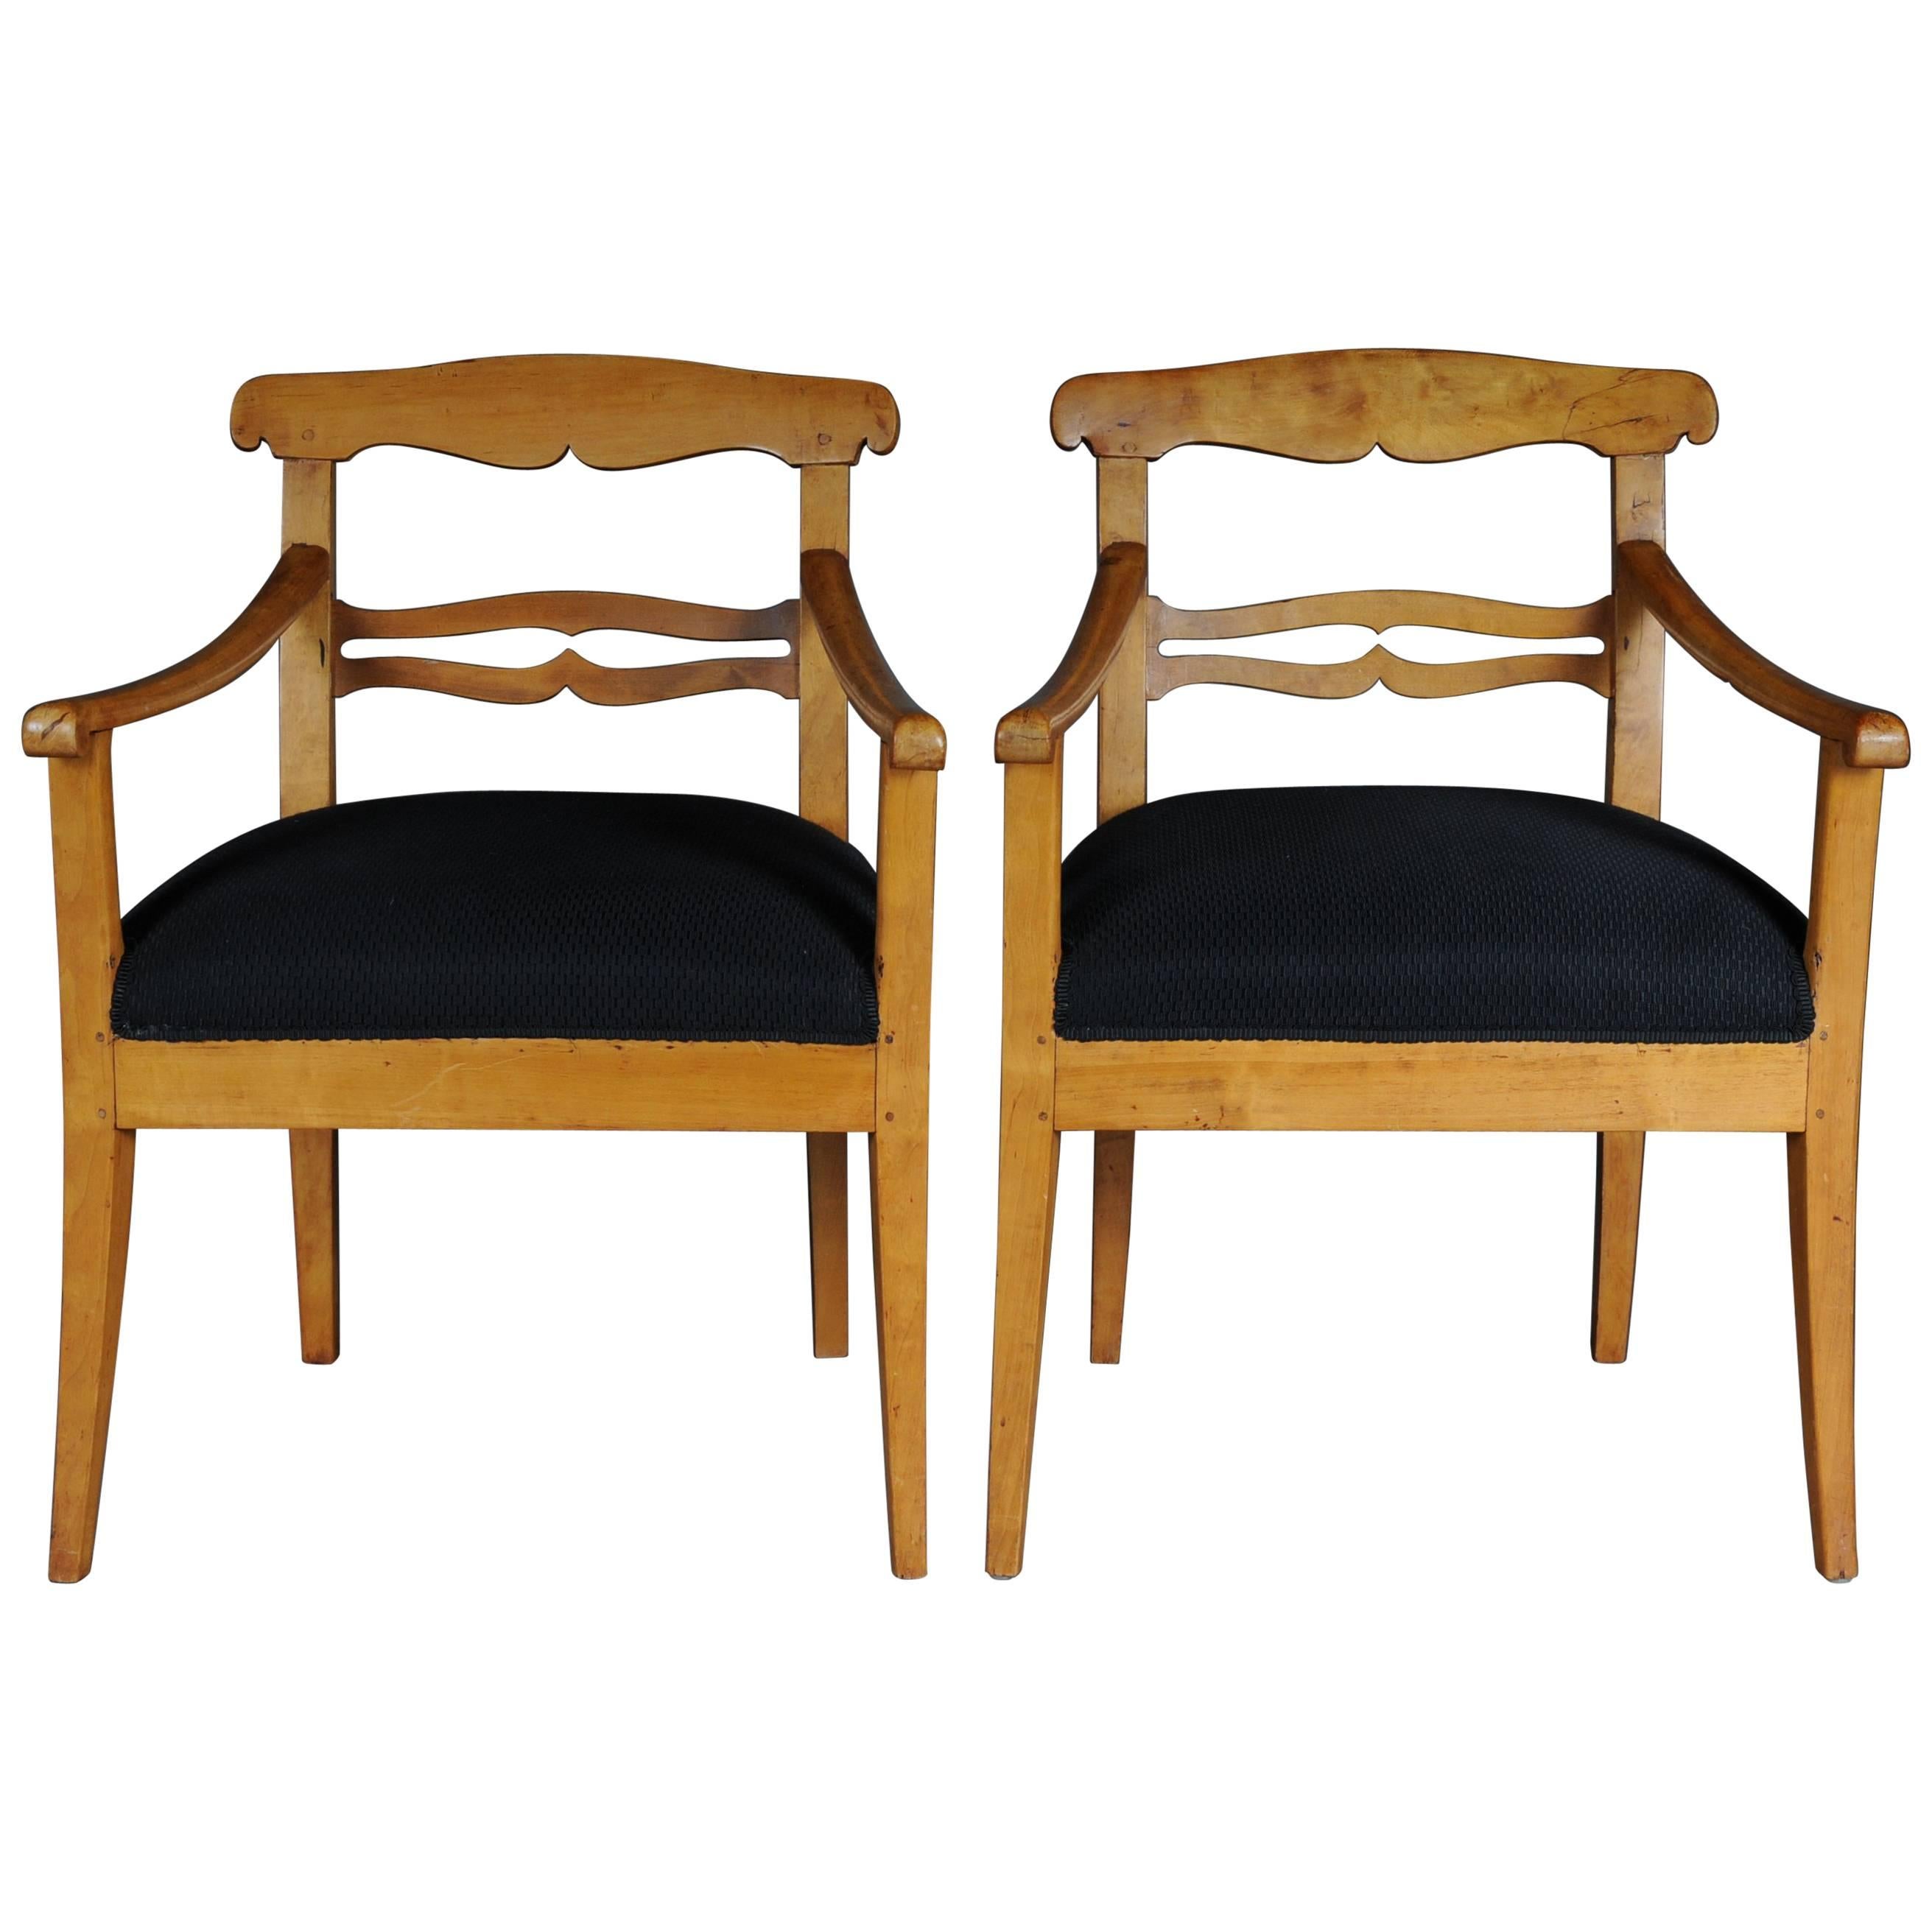 Two 19th Century Biedermeier Armchairs Made of Solid Birchwood